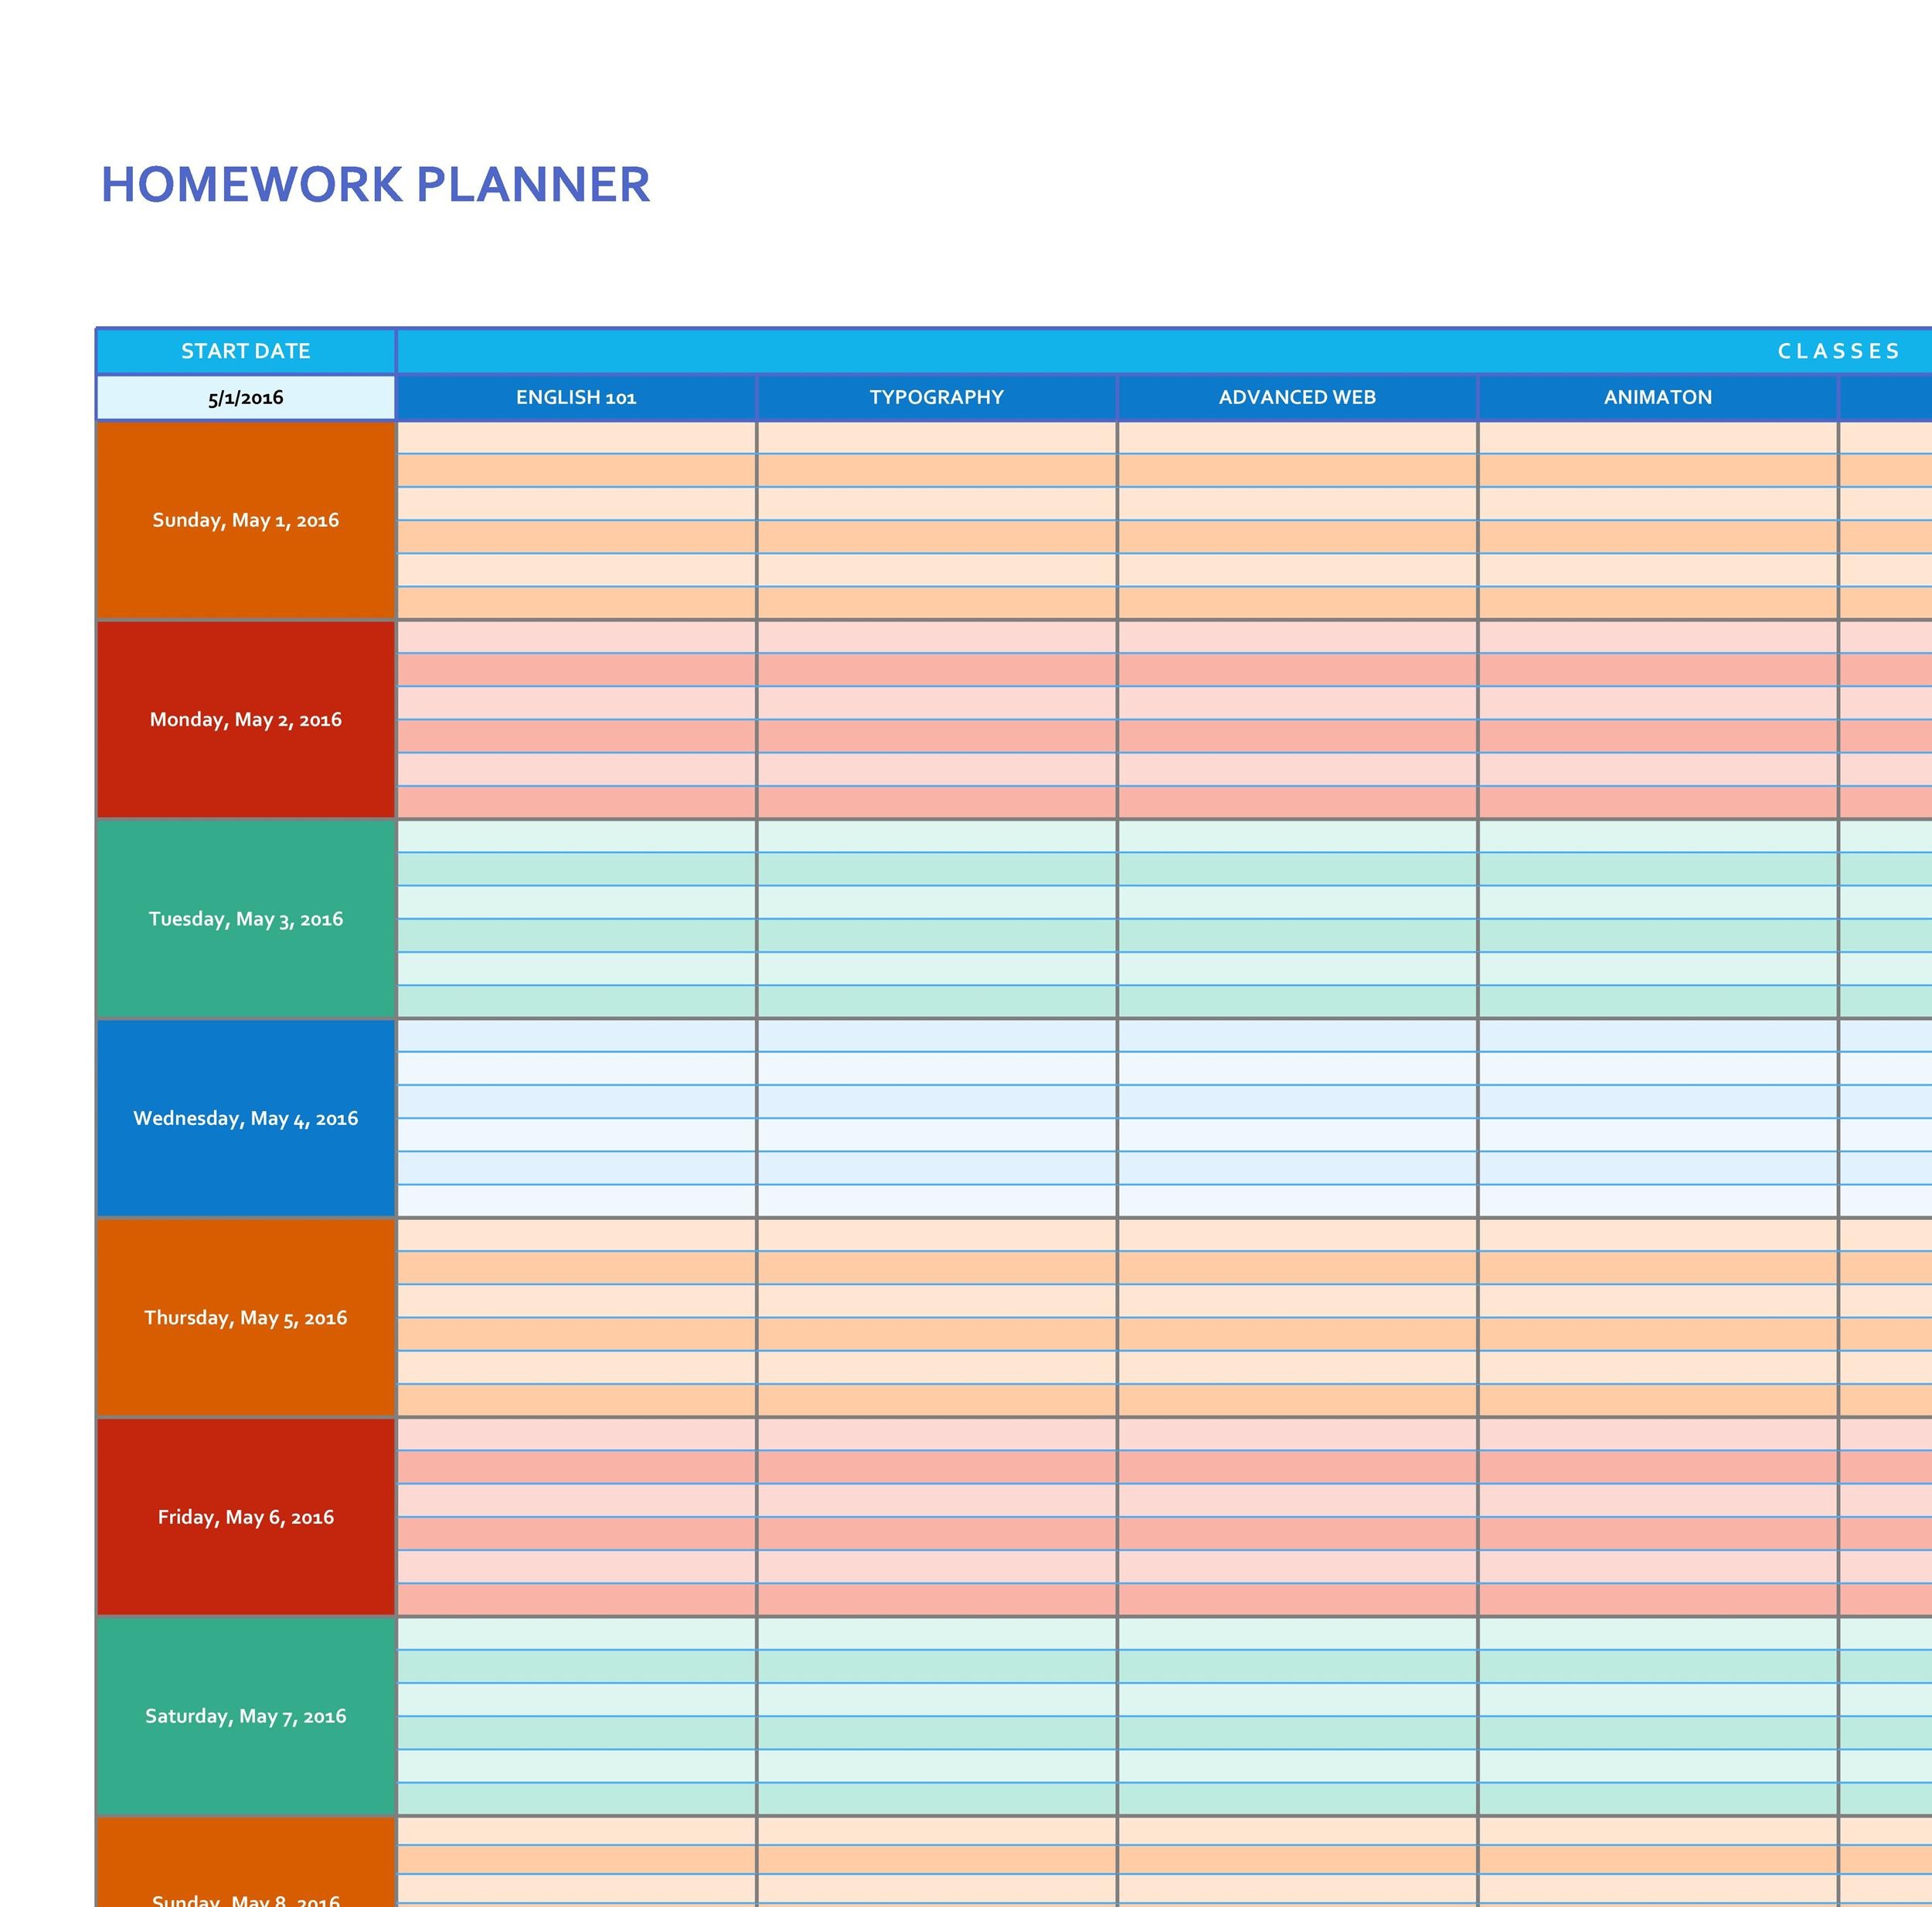 Free homework planner 04